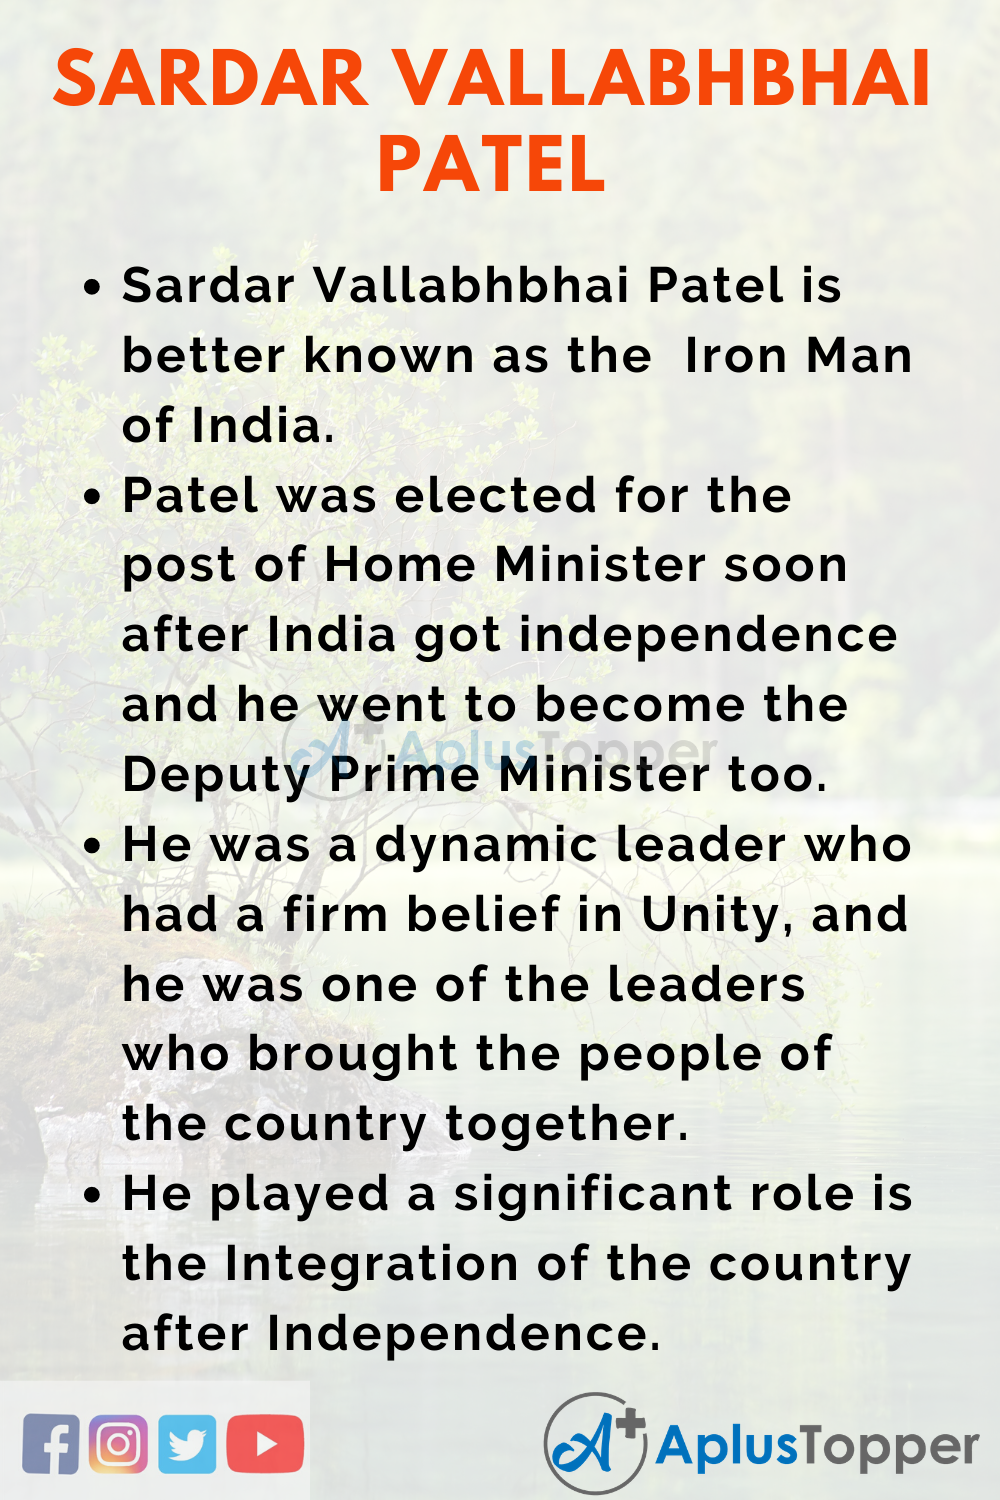 Essay on Sardar Vallabhbhai Patel